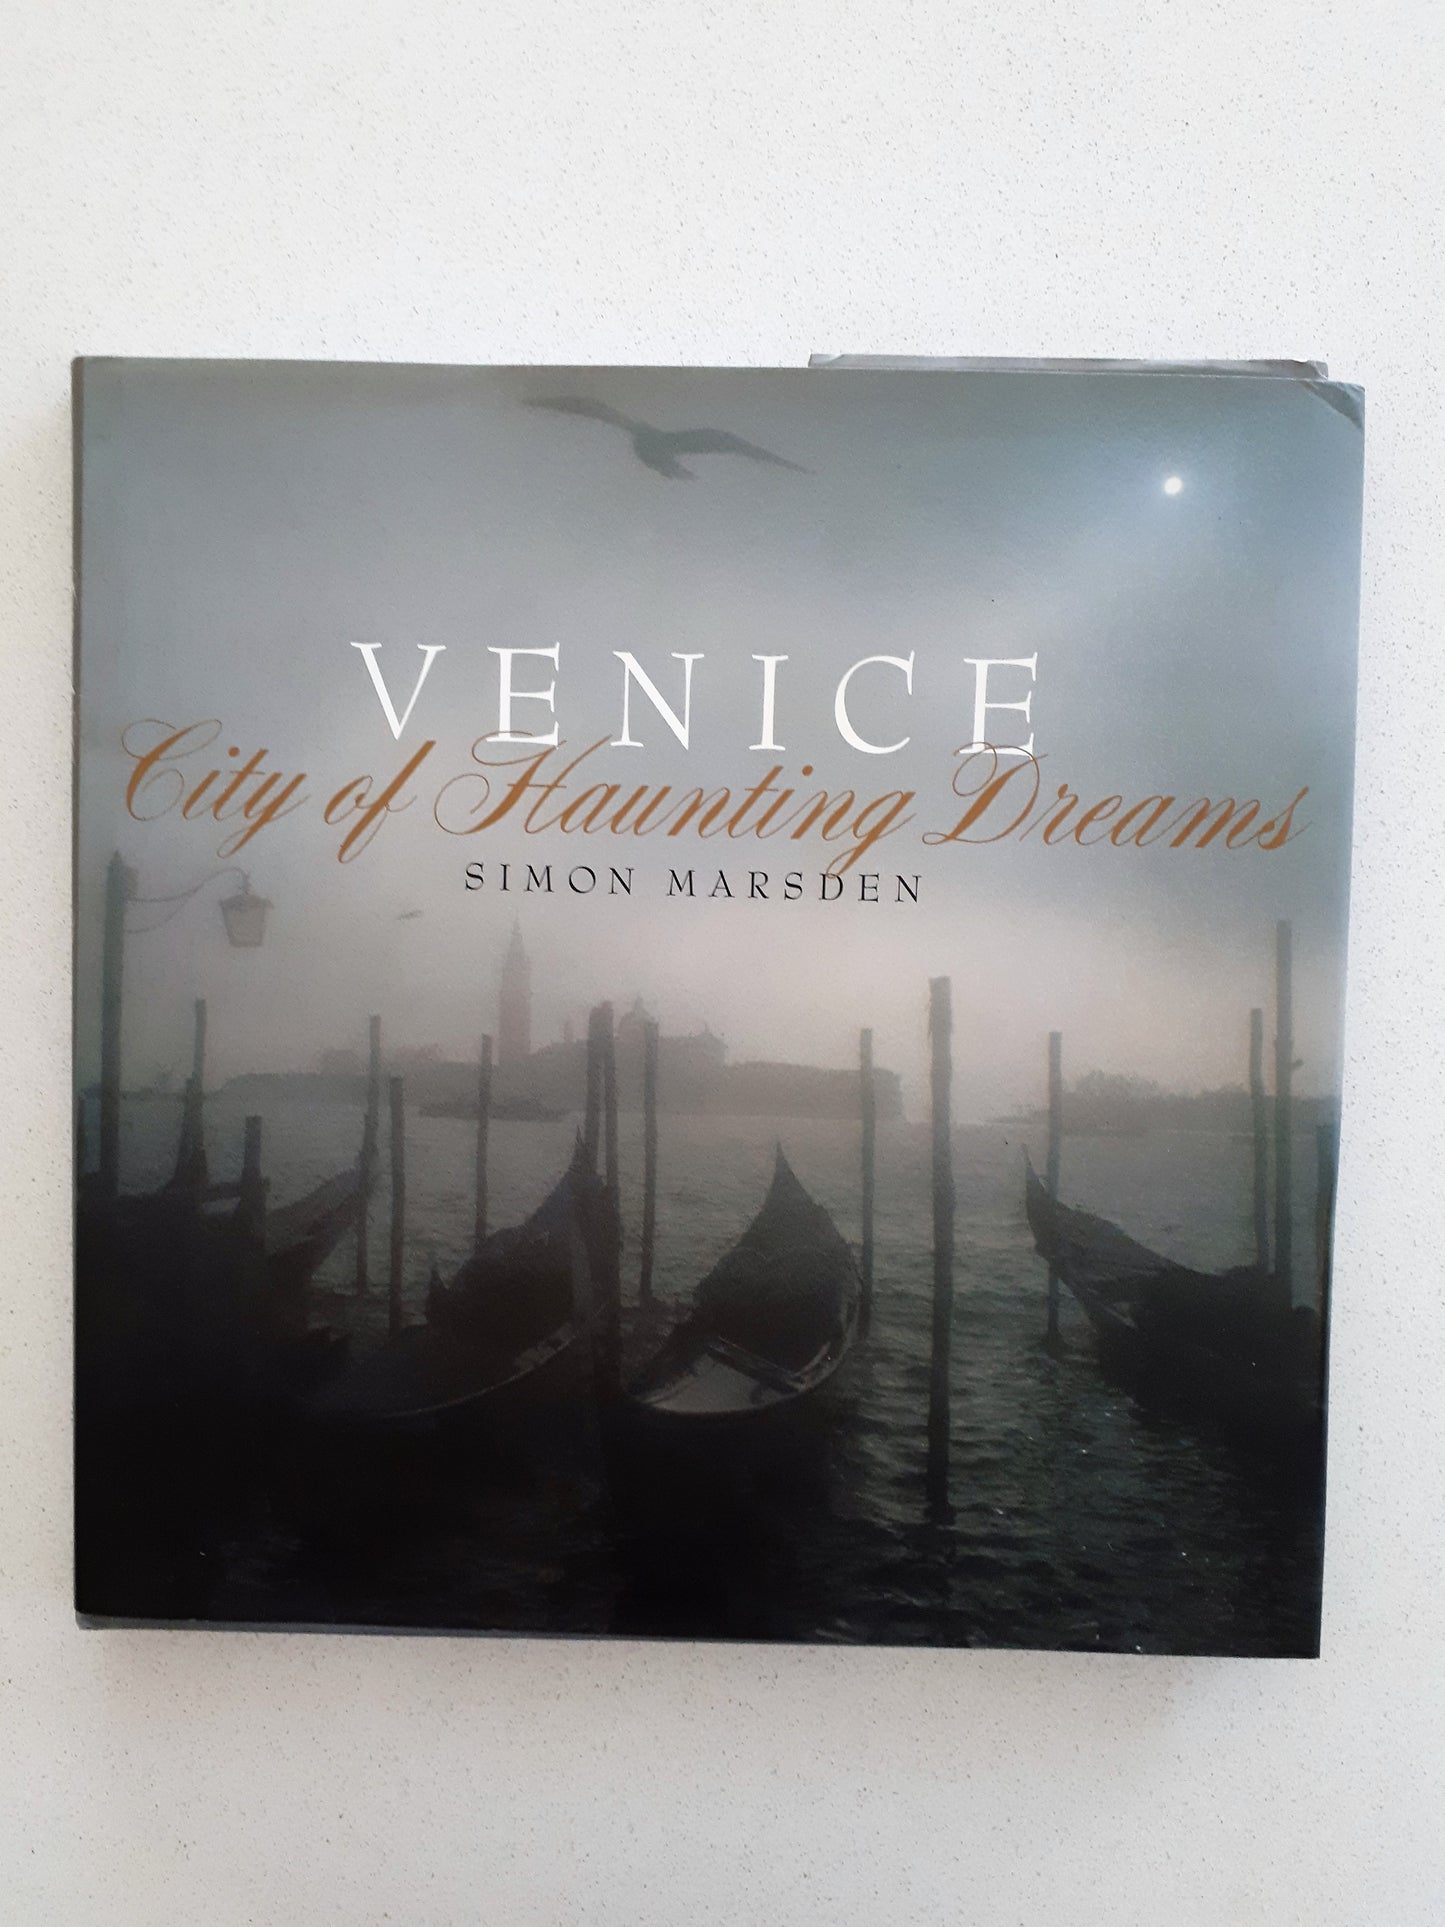 Venice: City of Haunting Dreams by Simon Marsden